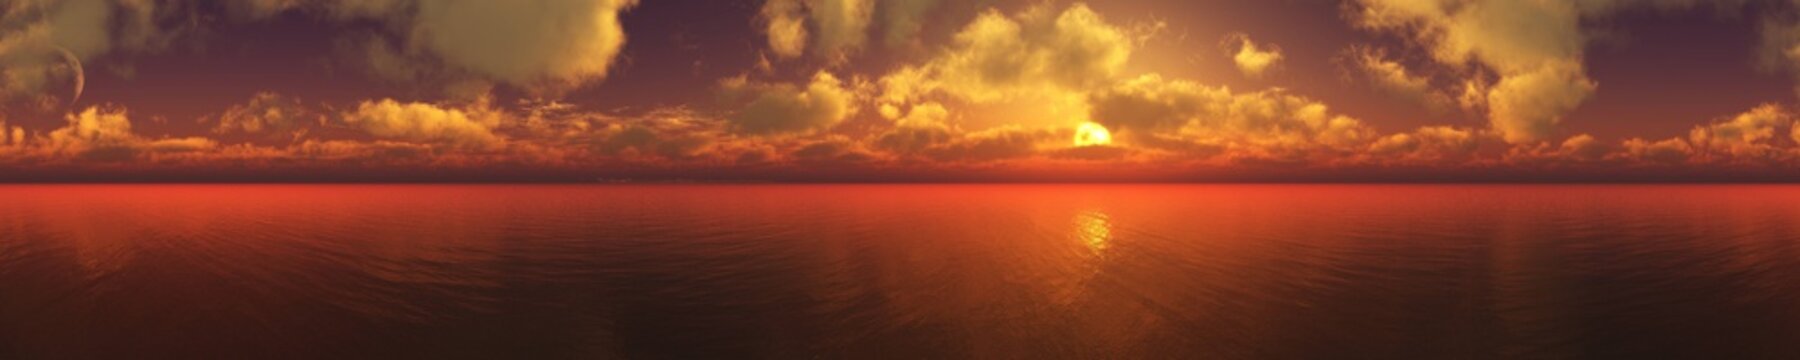 Panorama of the sea sunset, okansky landscape, sunrise over the sea, banner, 3d rendering